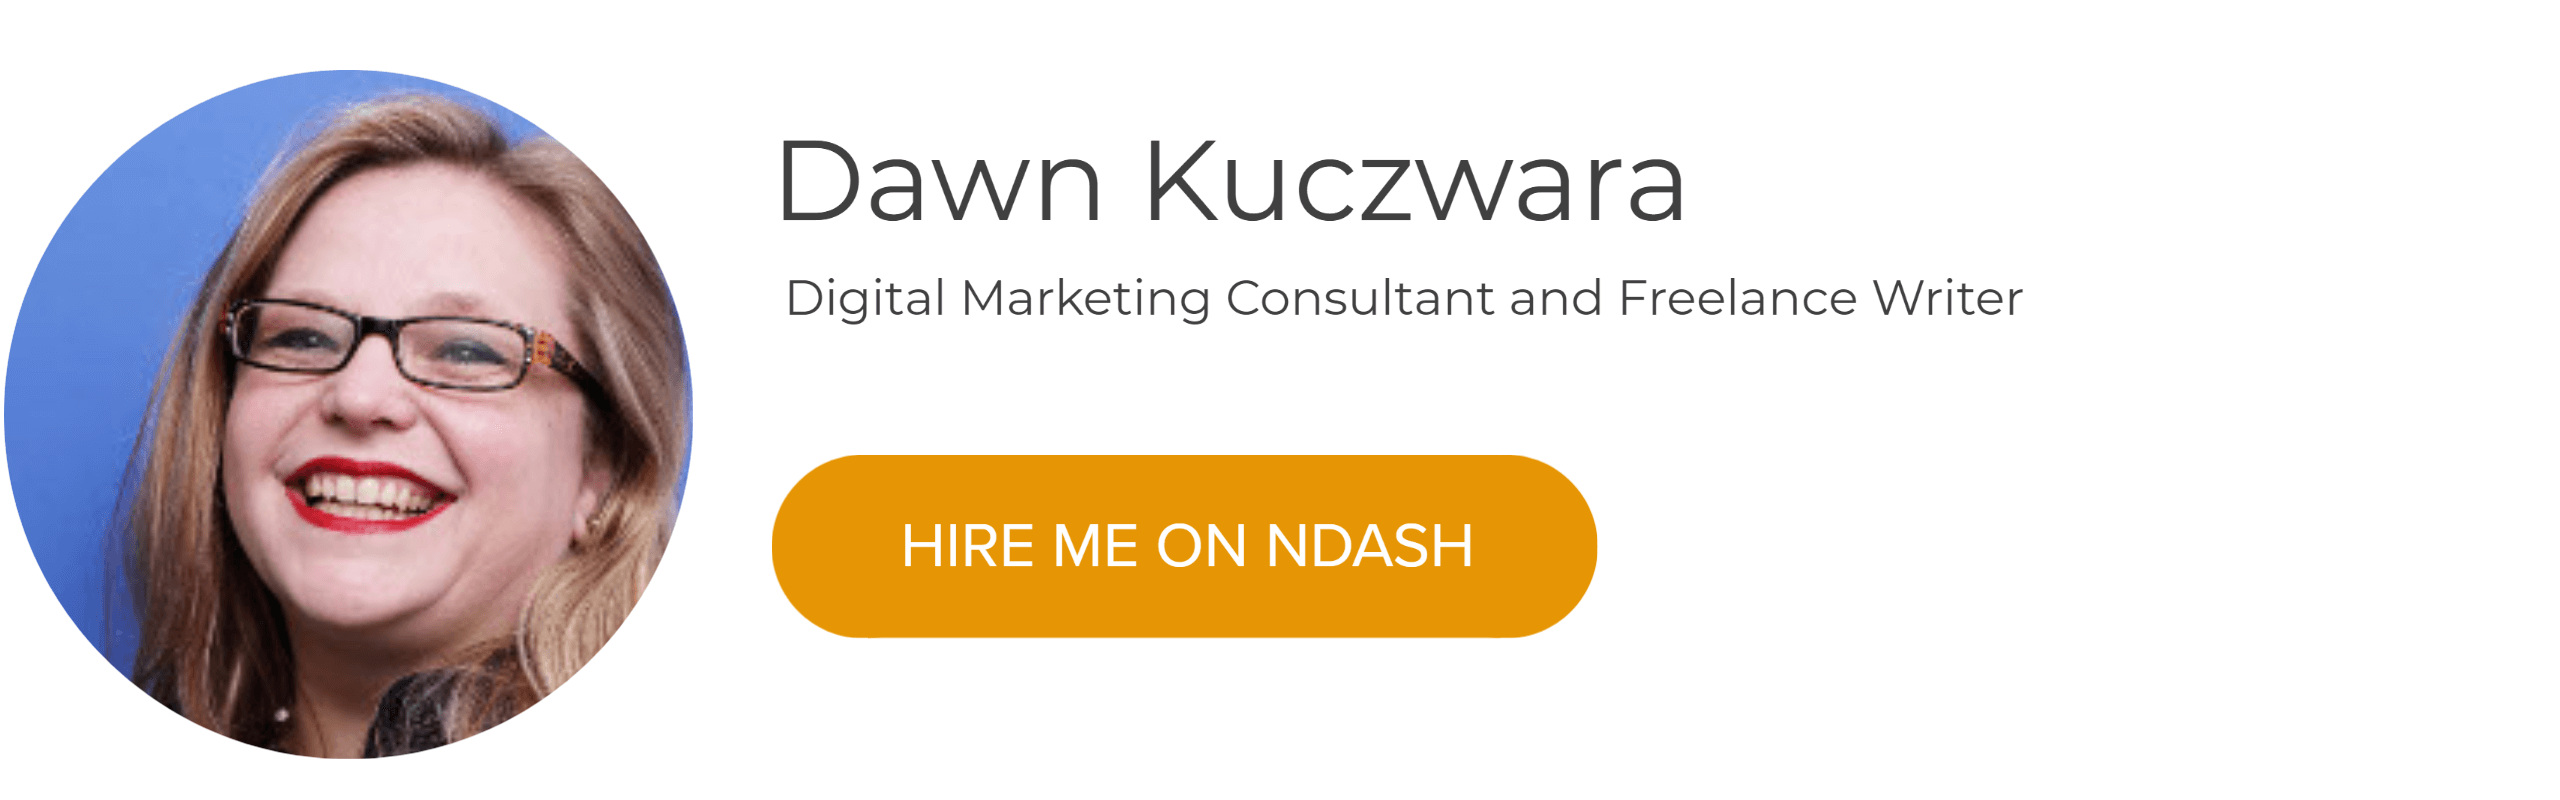 Dawn Kuczwara: Digital Marketing Consultant & Freelance Writer